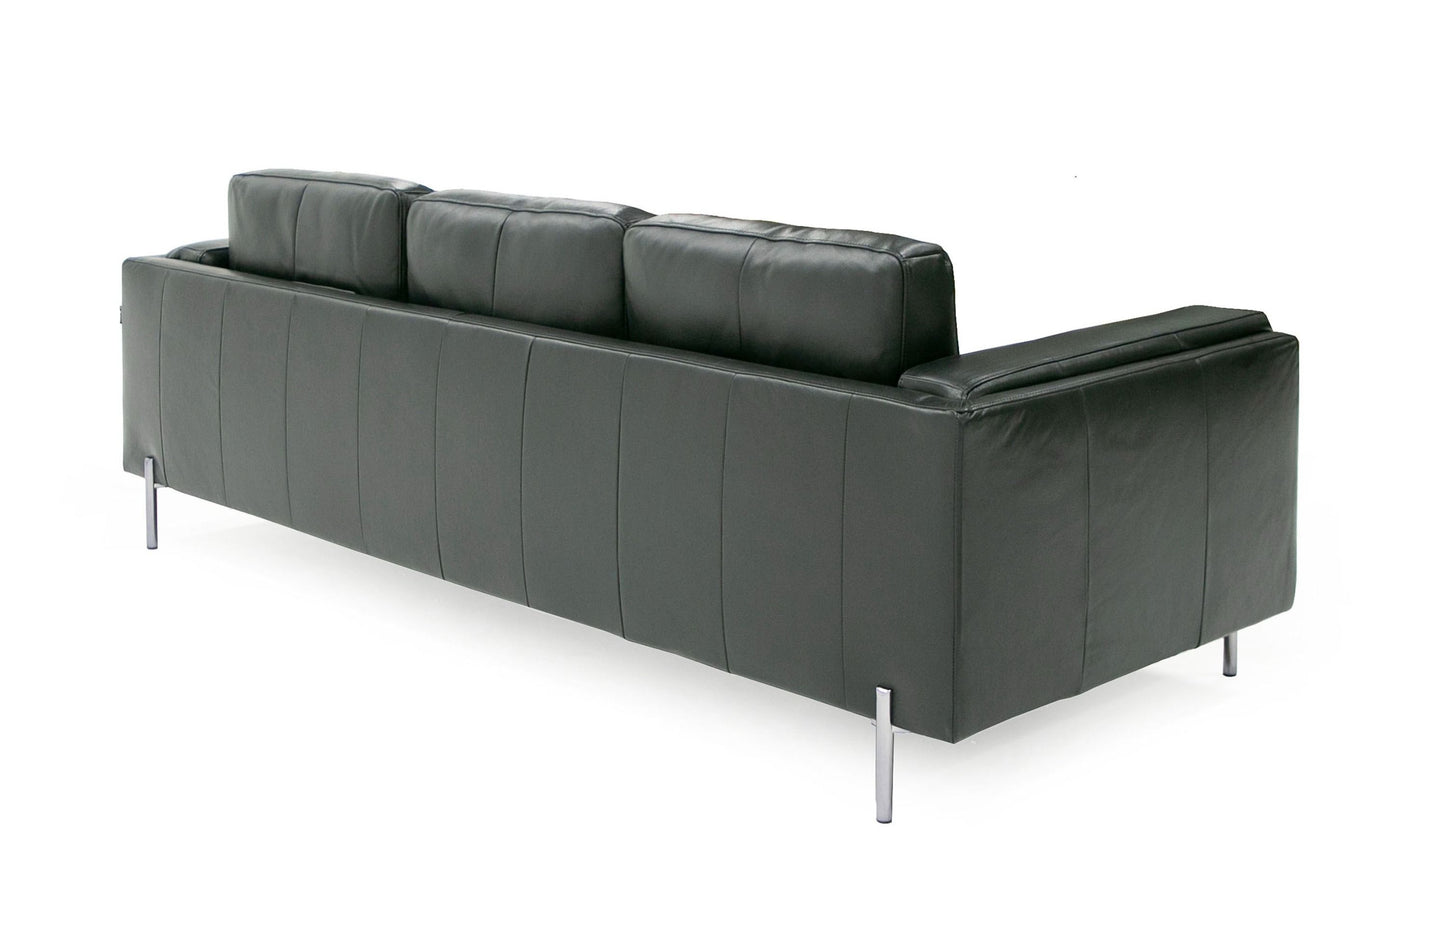 Divani Casa Schmidt - Modern Black Leather Sofa